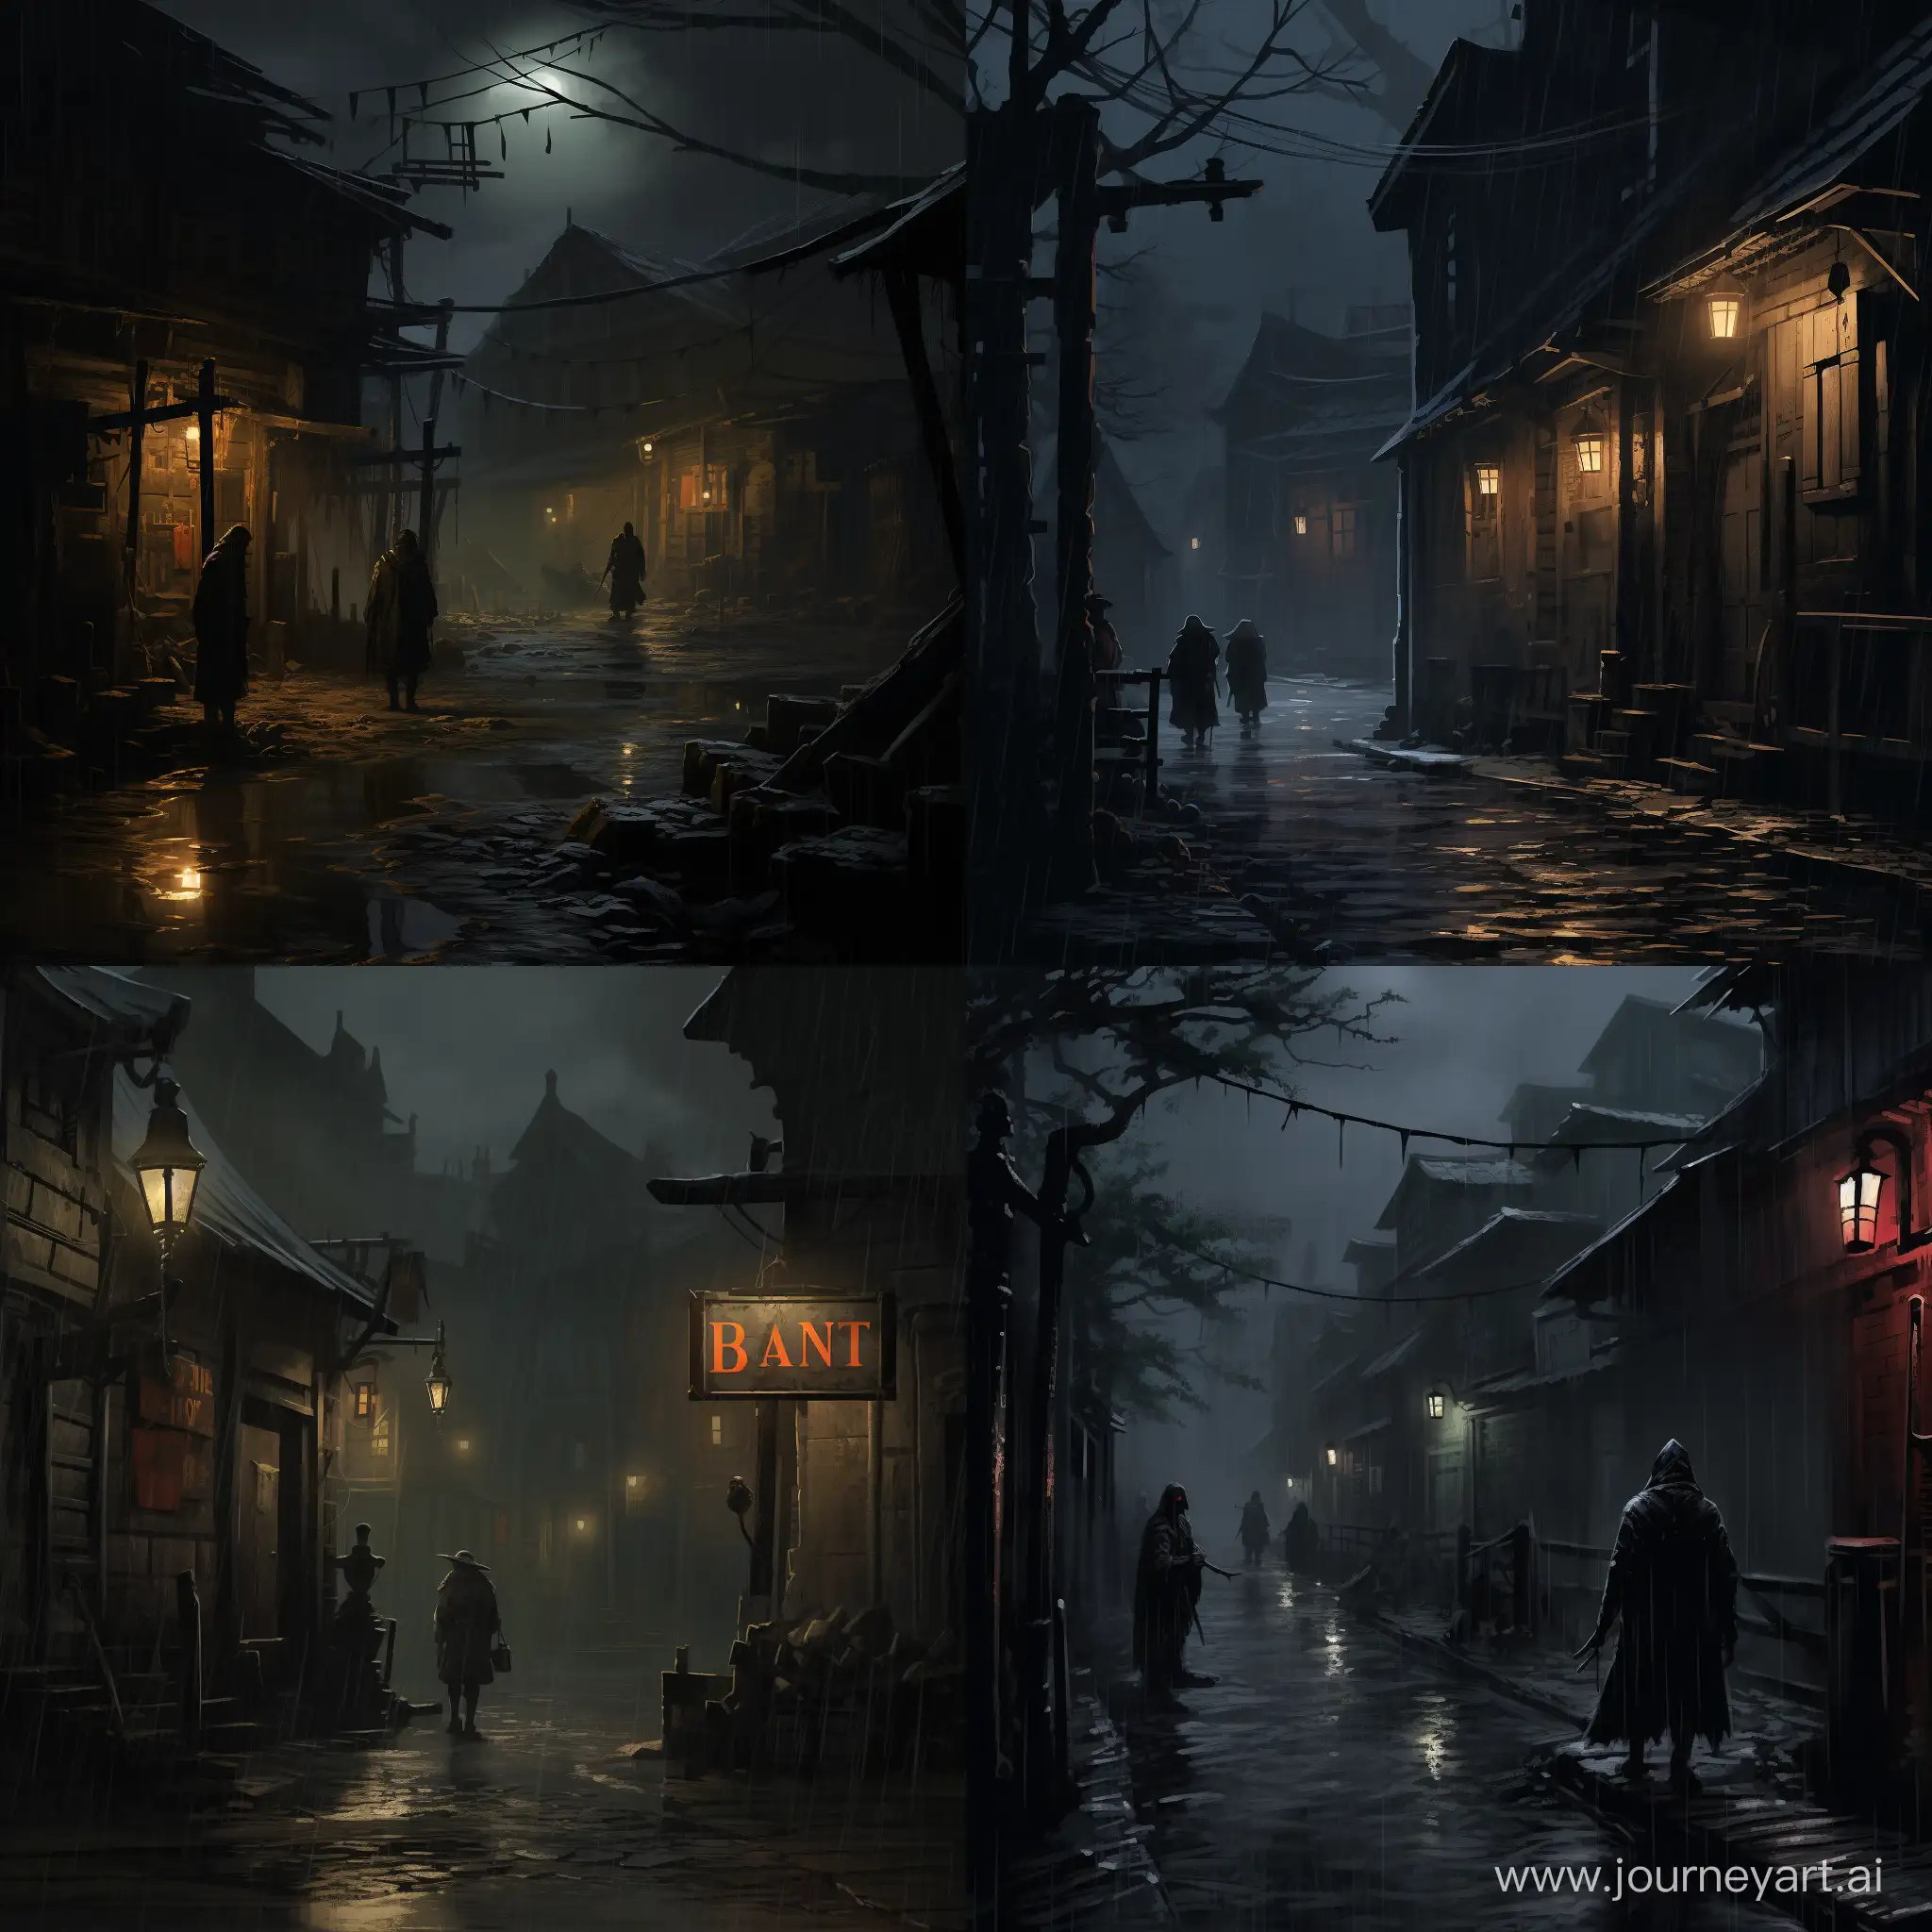 Bandit-Ambush-in-Dark-Rainy-Alley-with-Solitary-Lantern-Light